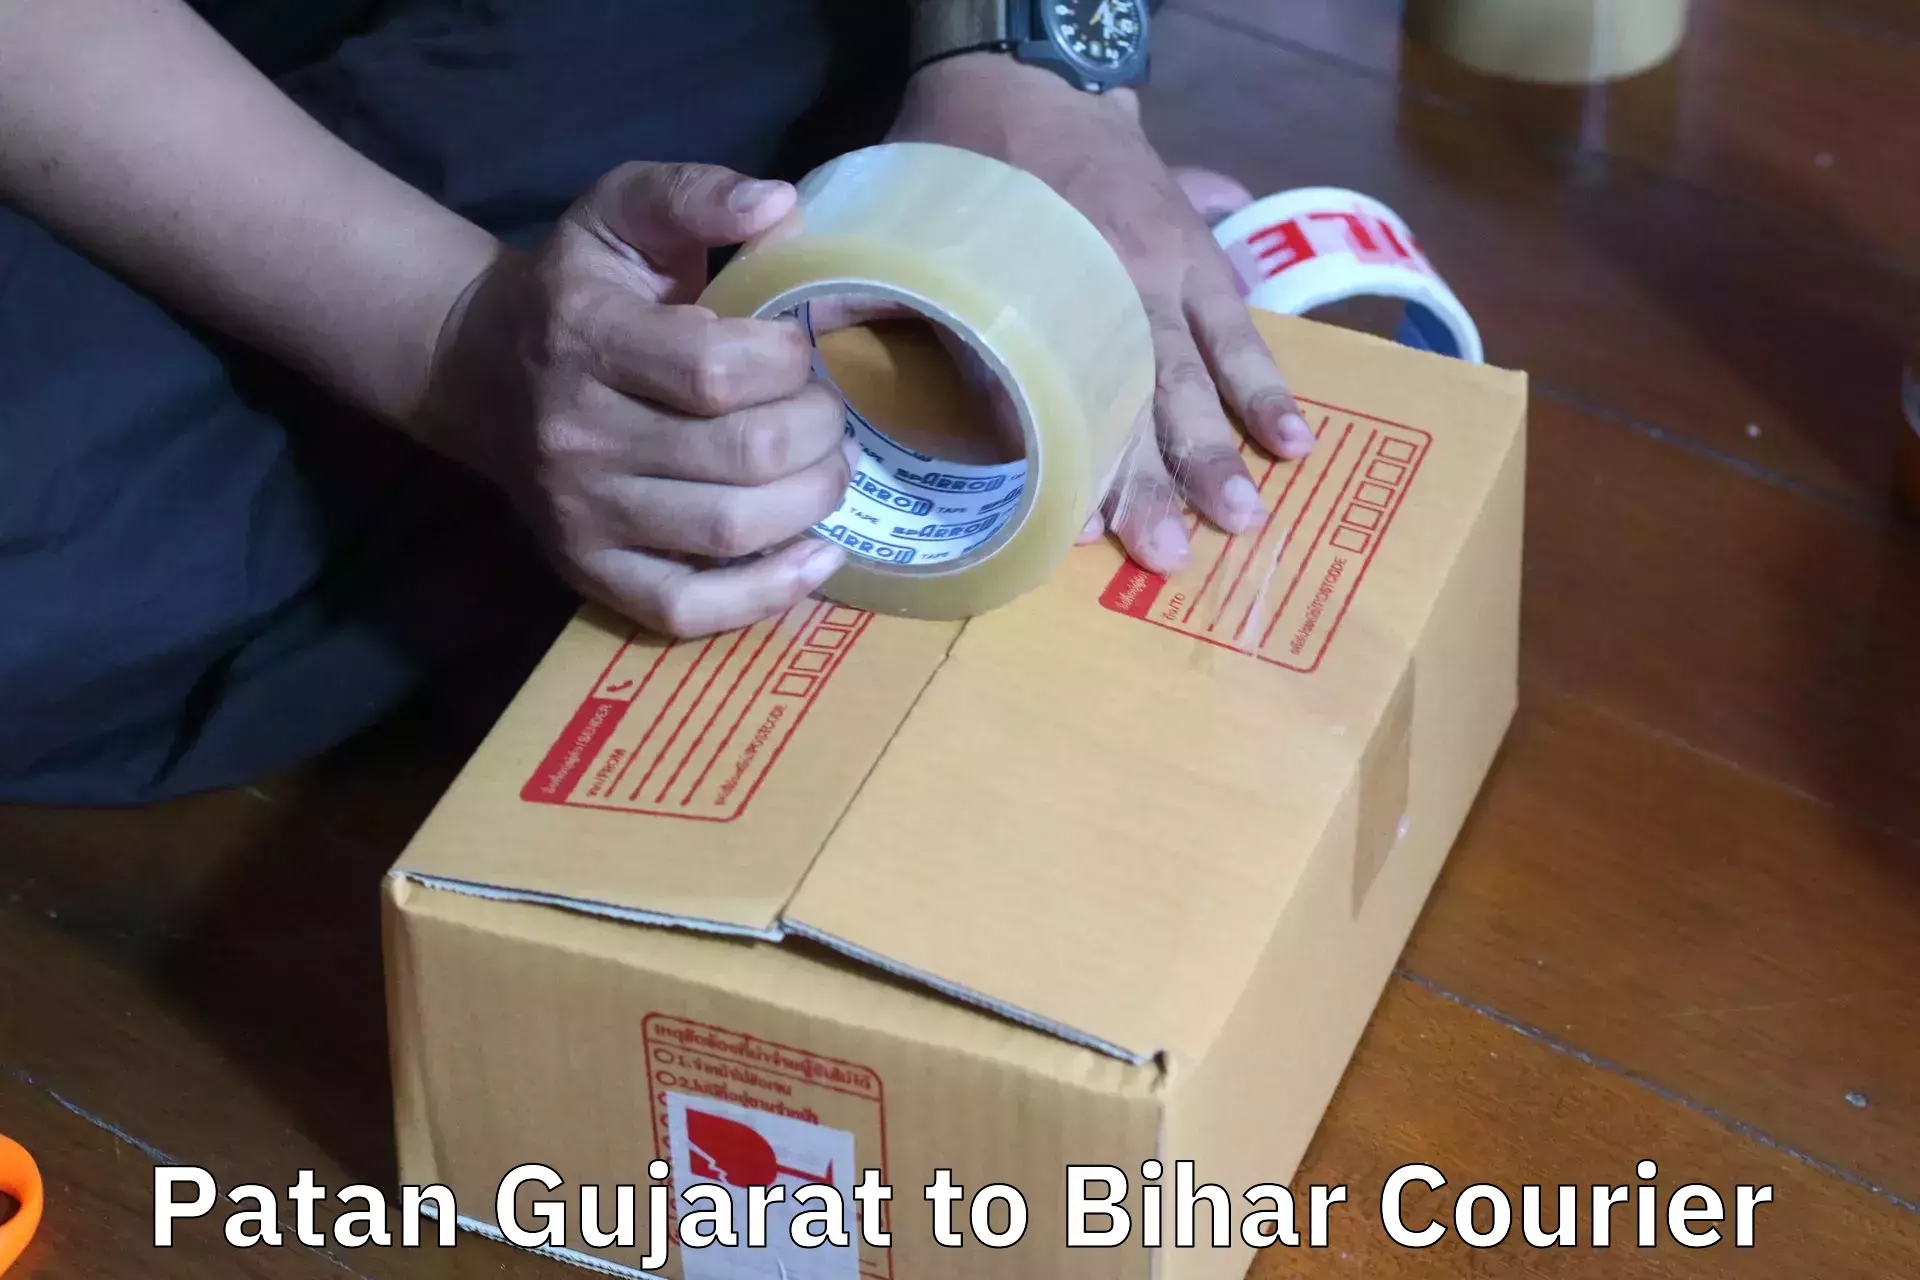 Specialized moving company Patan Gujarat to Bihar